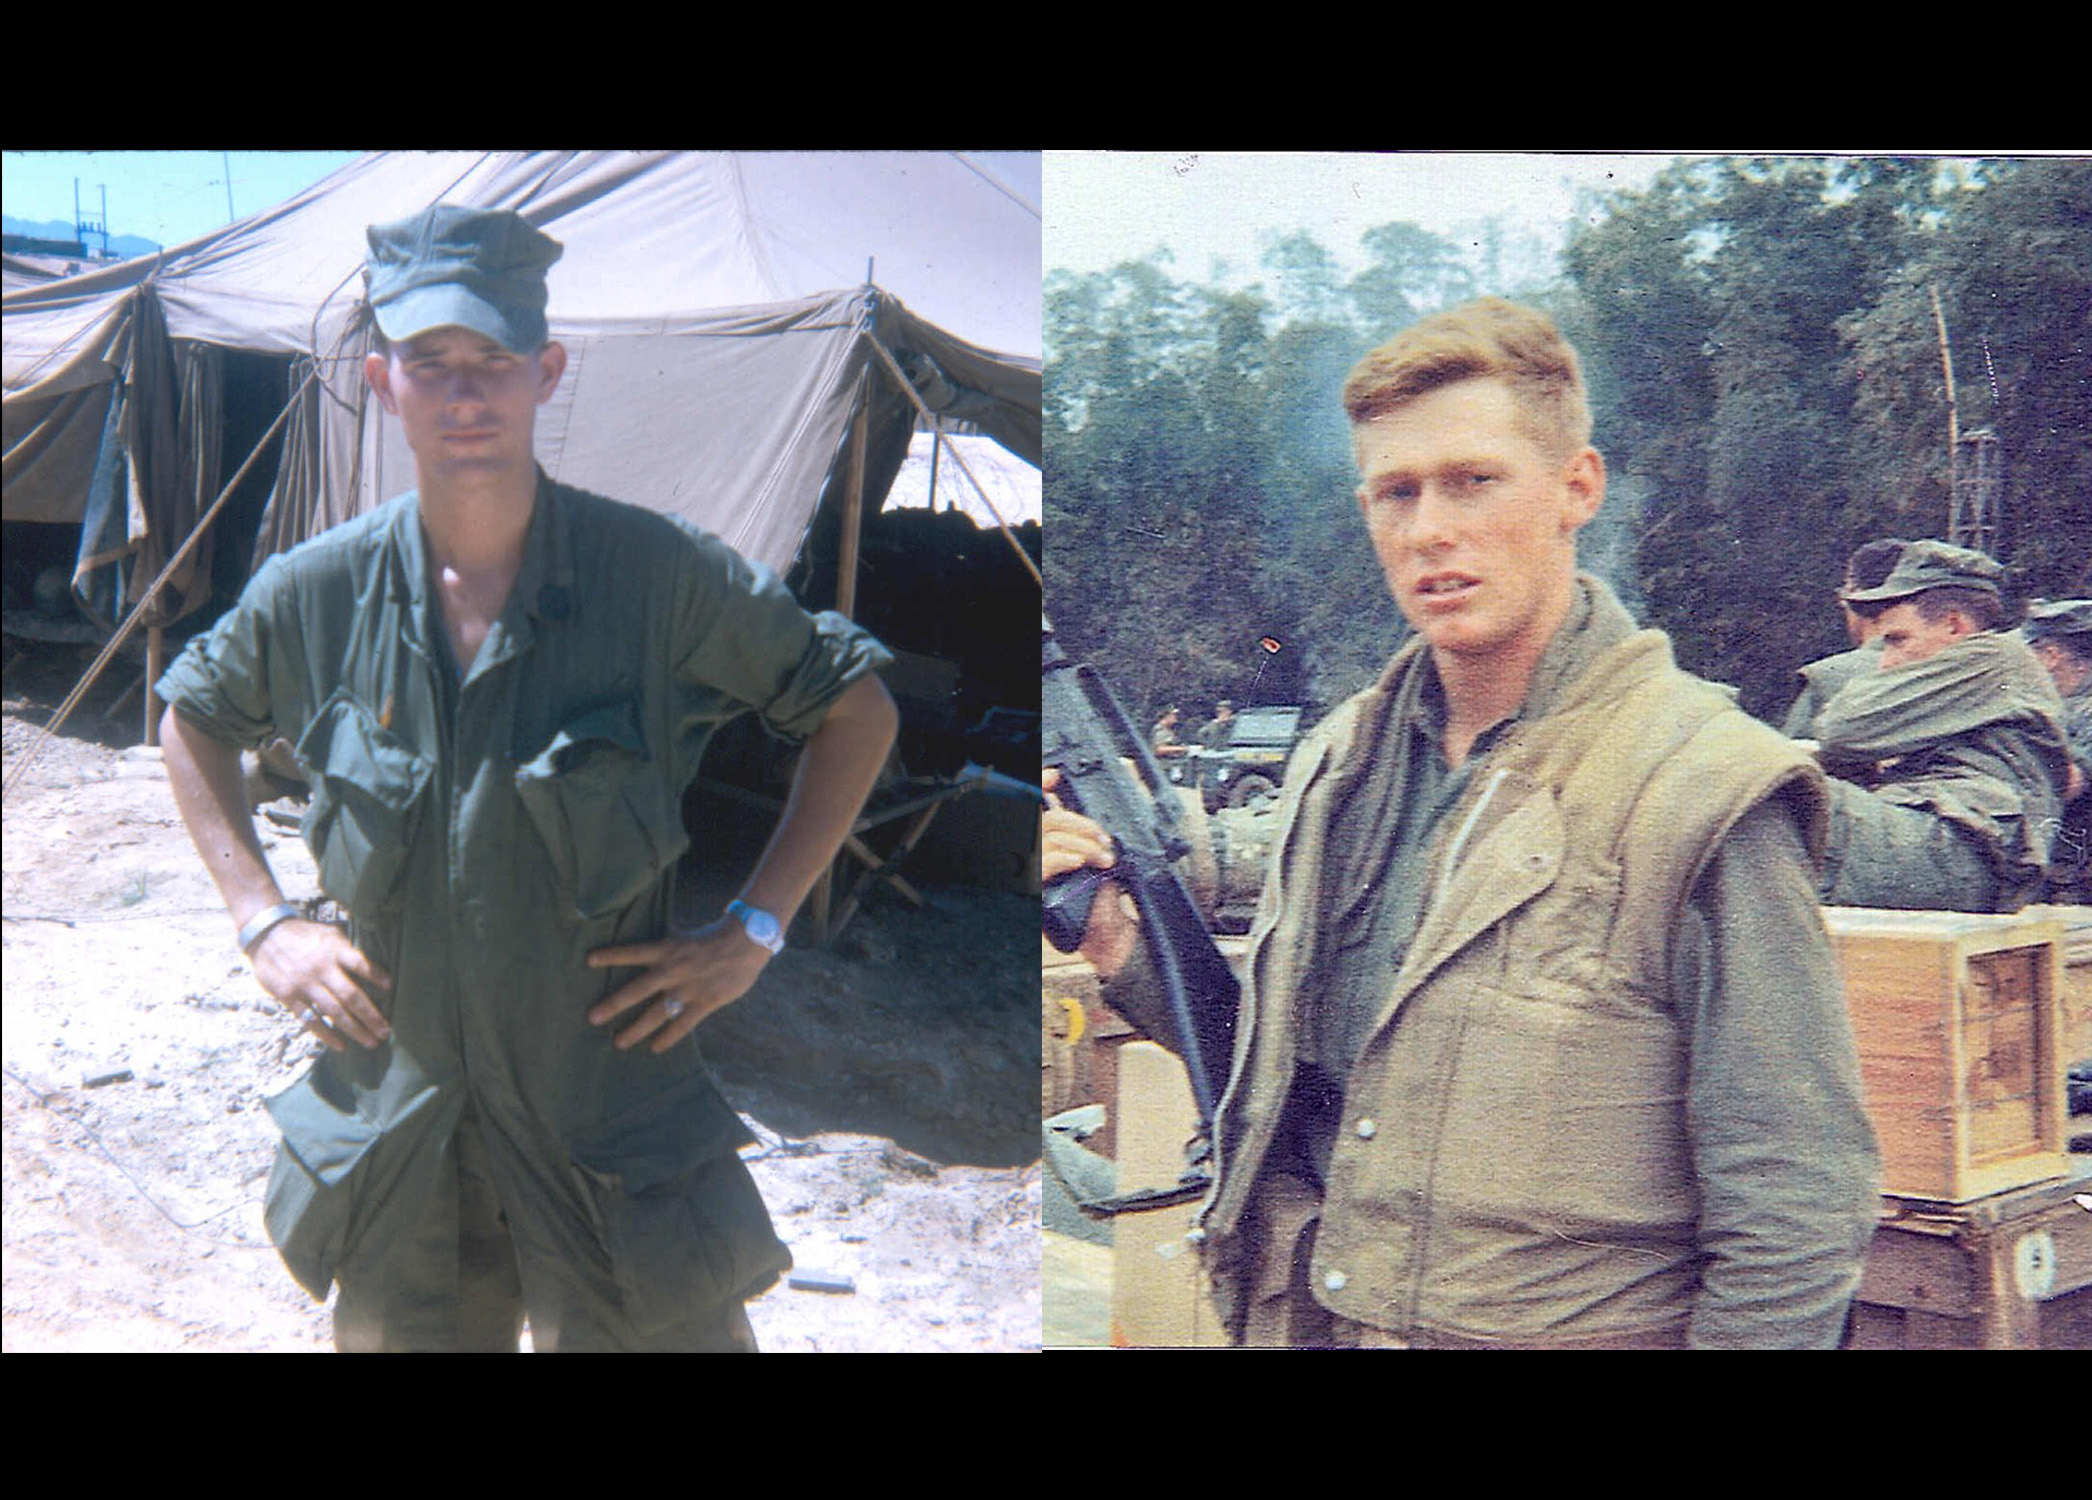 ‘I’m Glad We Made It Through’: Vietnam Veterans Look Back On Service Together